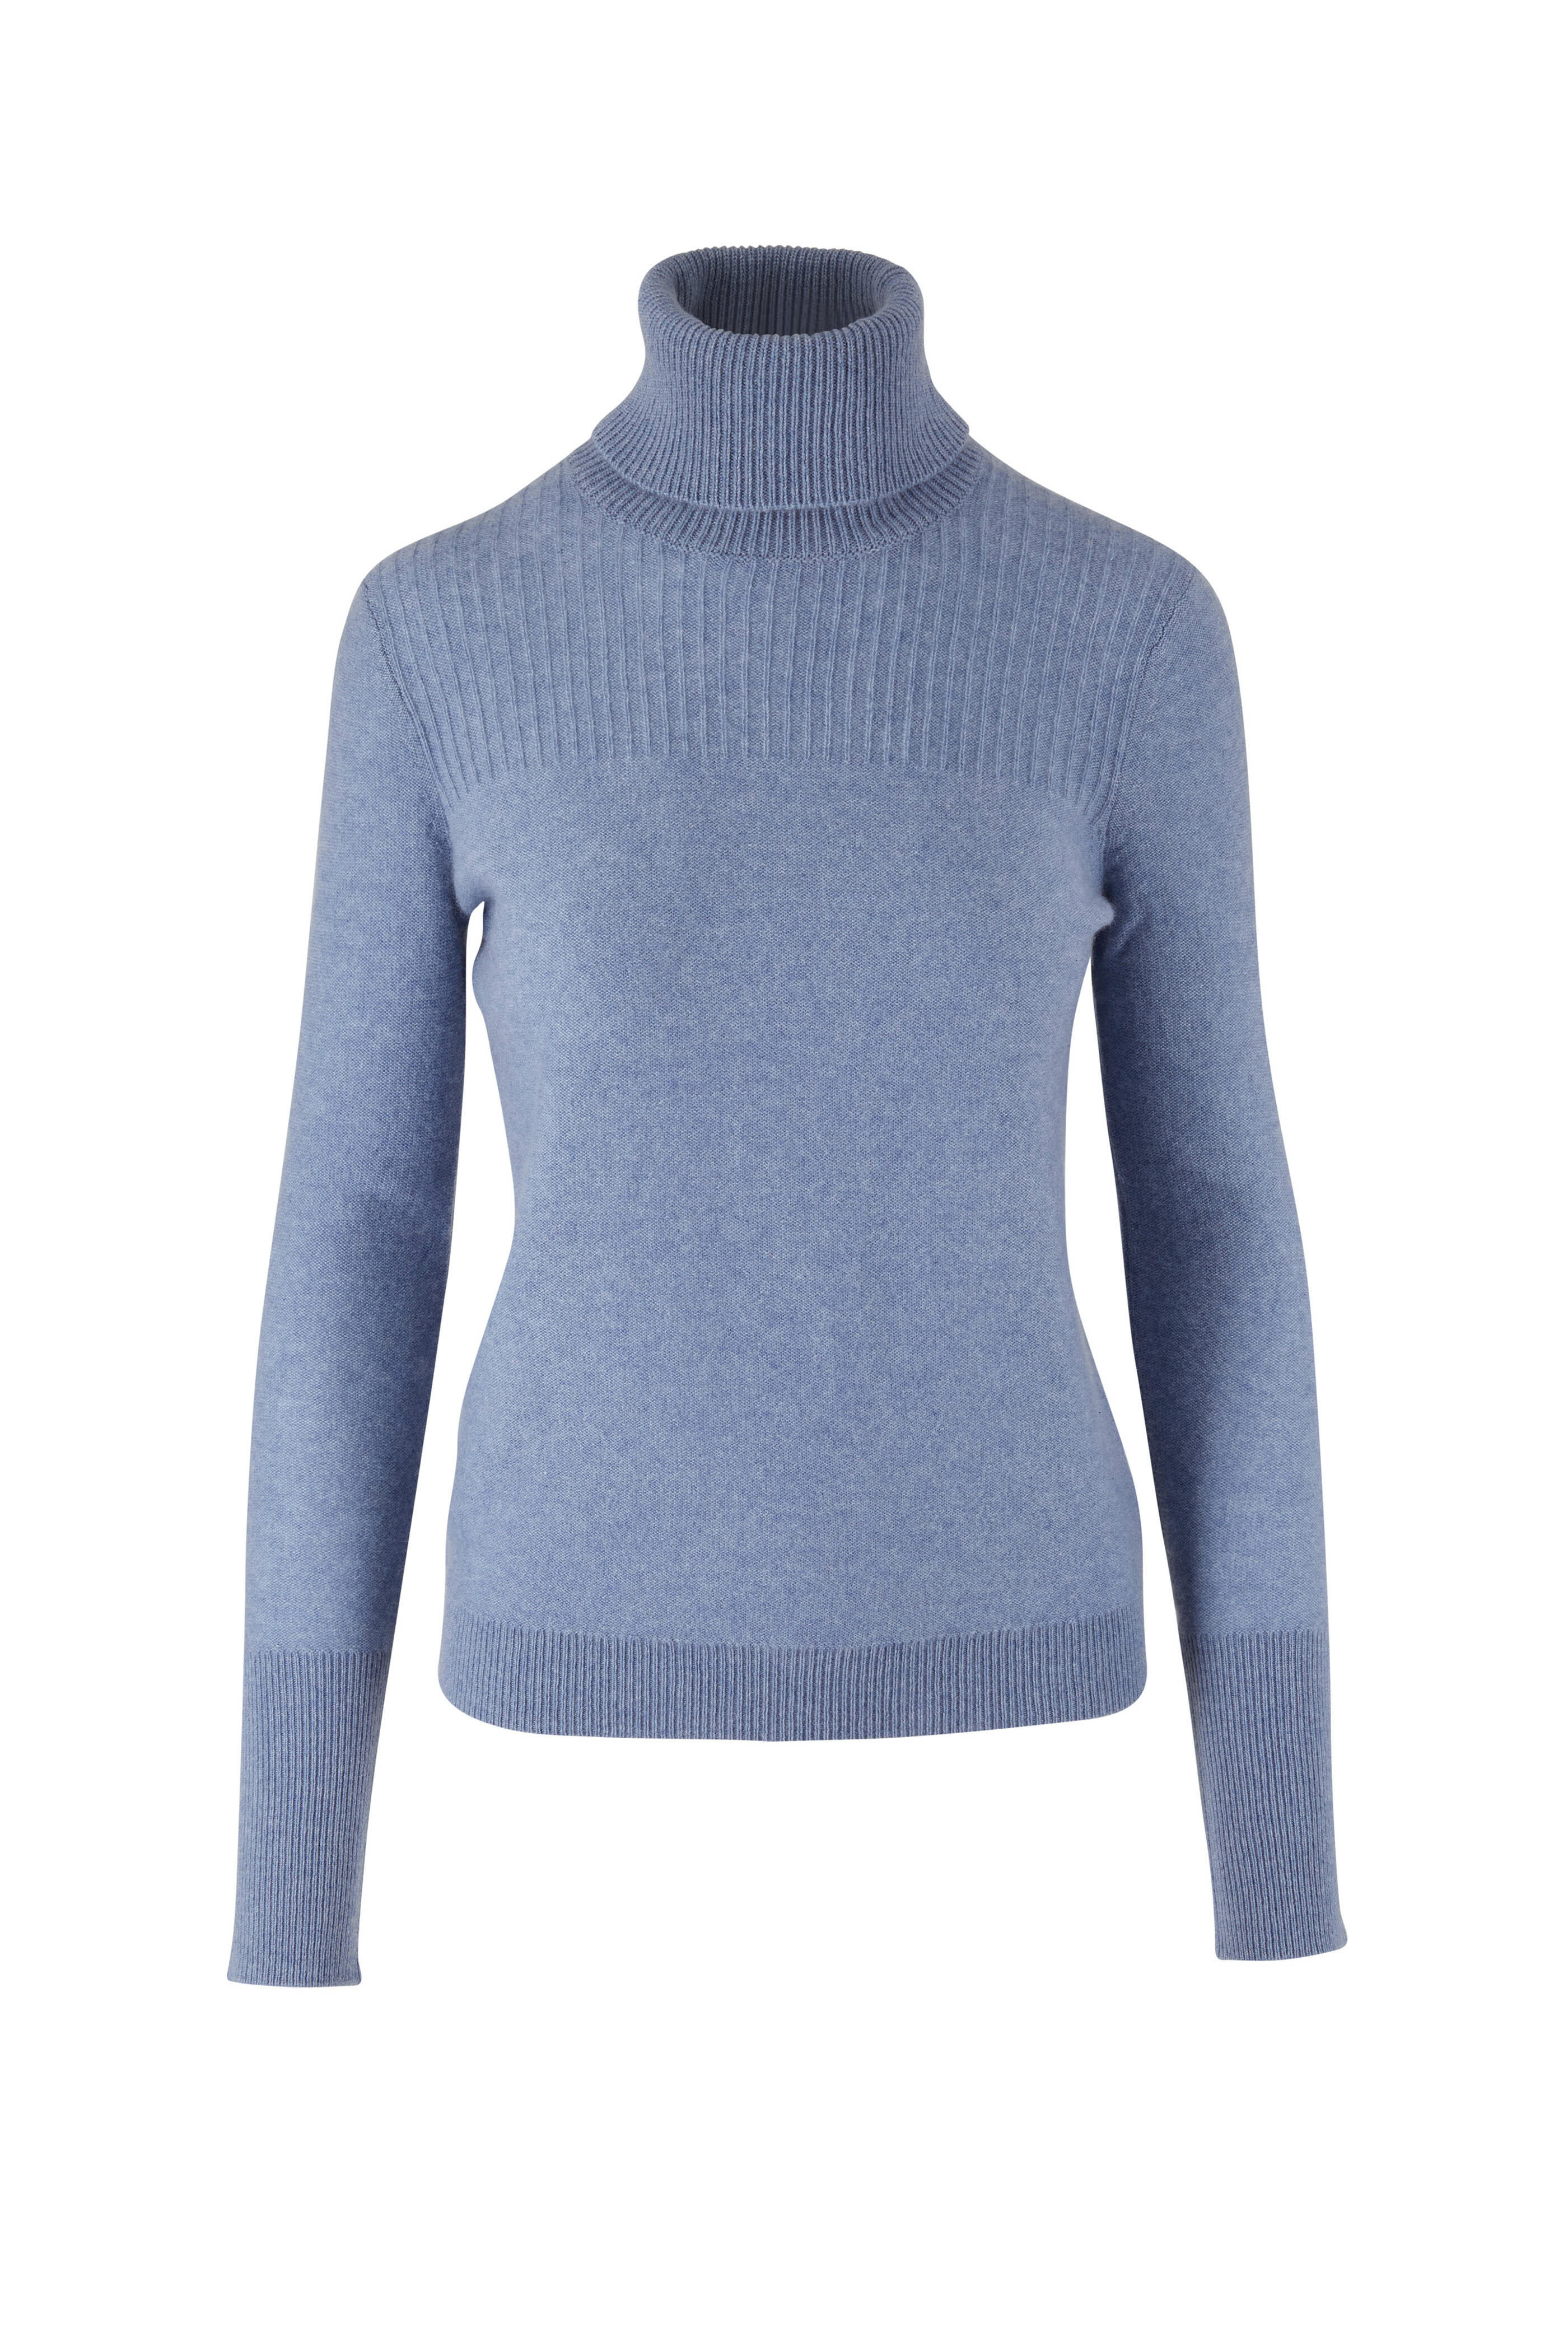 Veronica Beard - Kressy Light Blue Cashmere Turtleneck Sweater